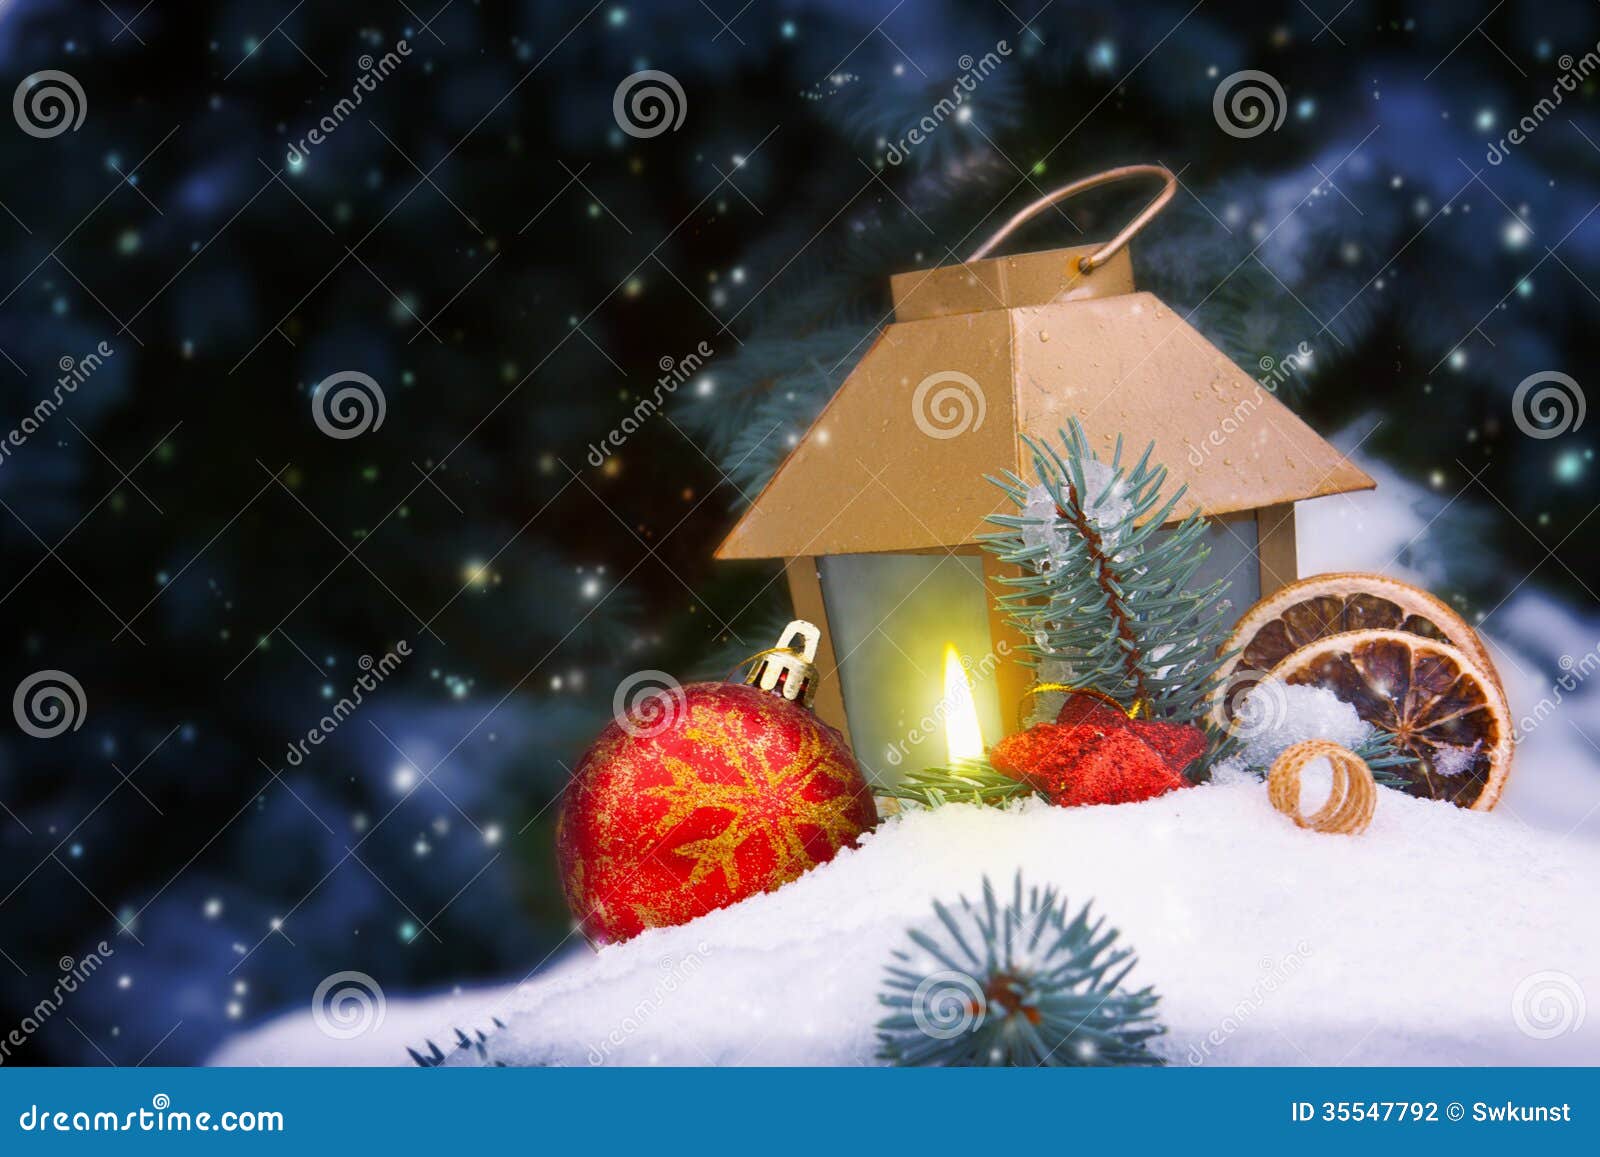 Winter lantern. stock photo. Image of season, latern - 35547792